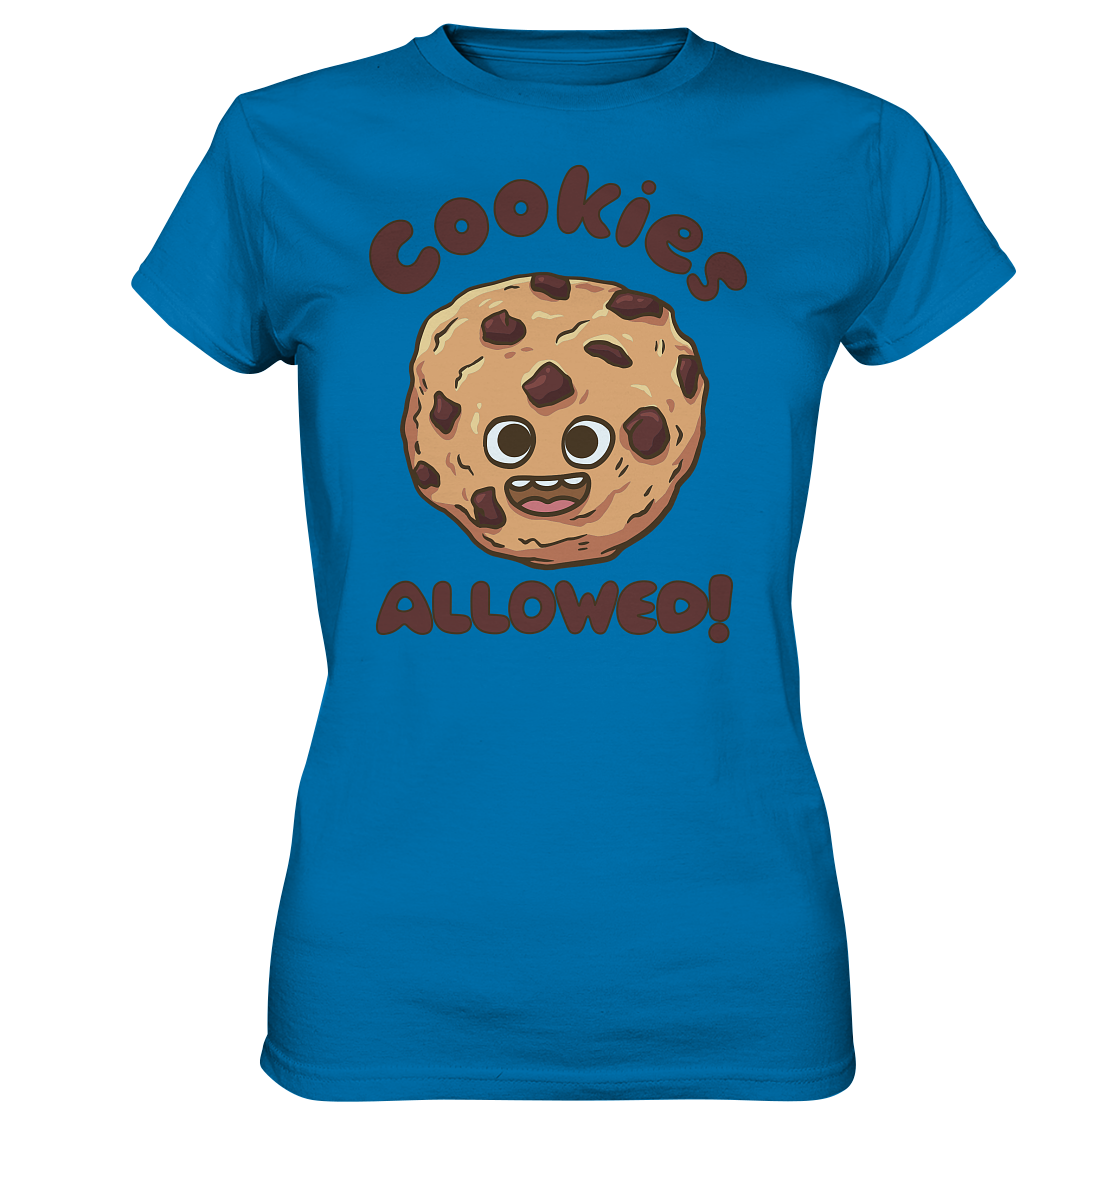 Cookies allowed! - Ladies Premium Shirt